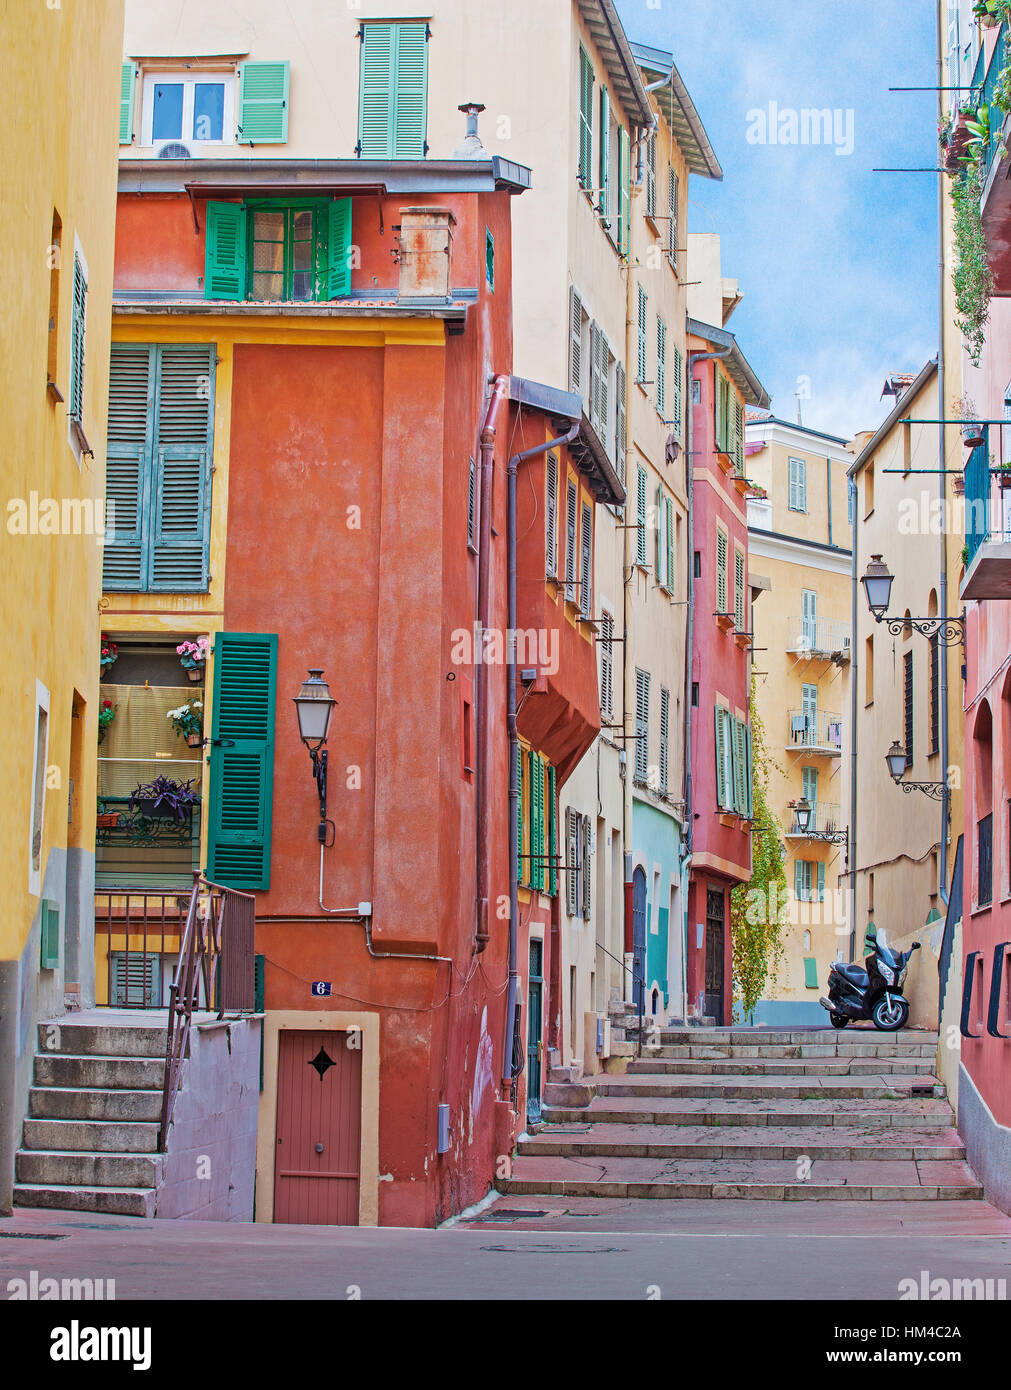 Vieille Ville, Nice old town, street scene, Cote d'Azur, France Stock Photo